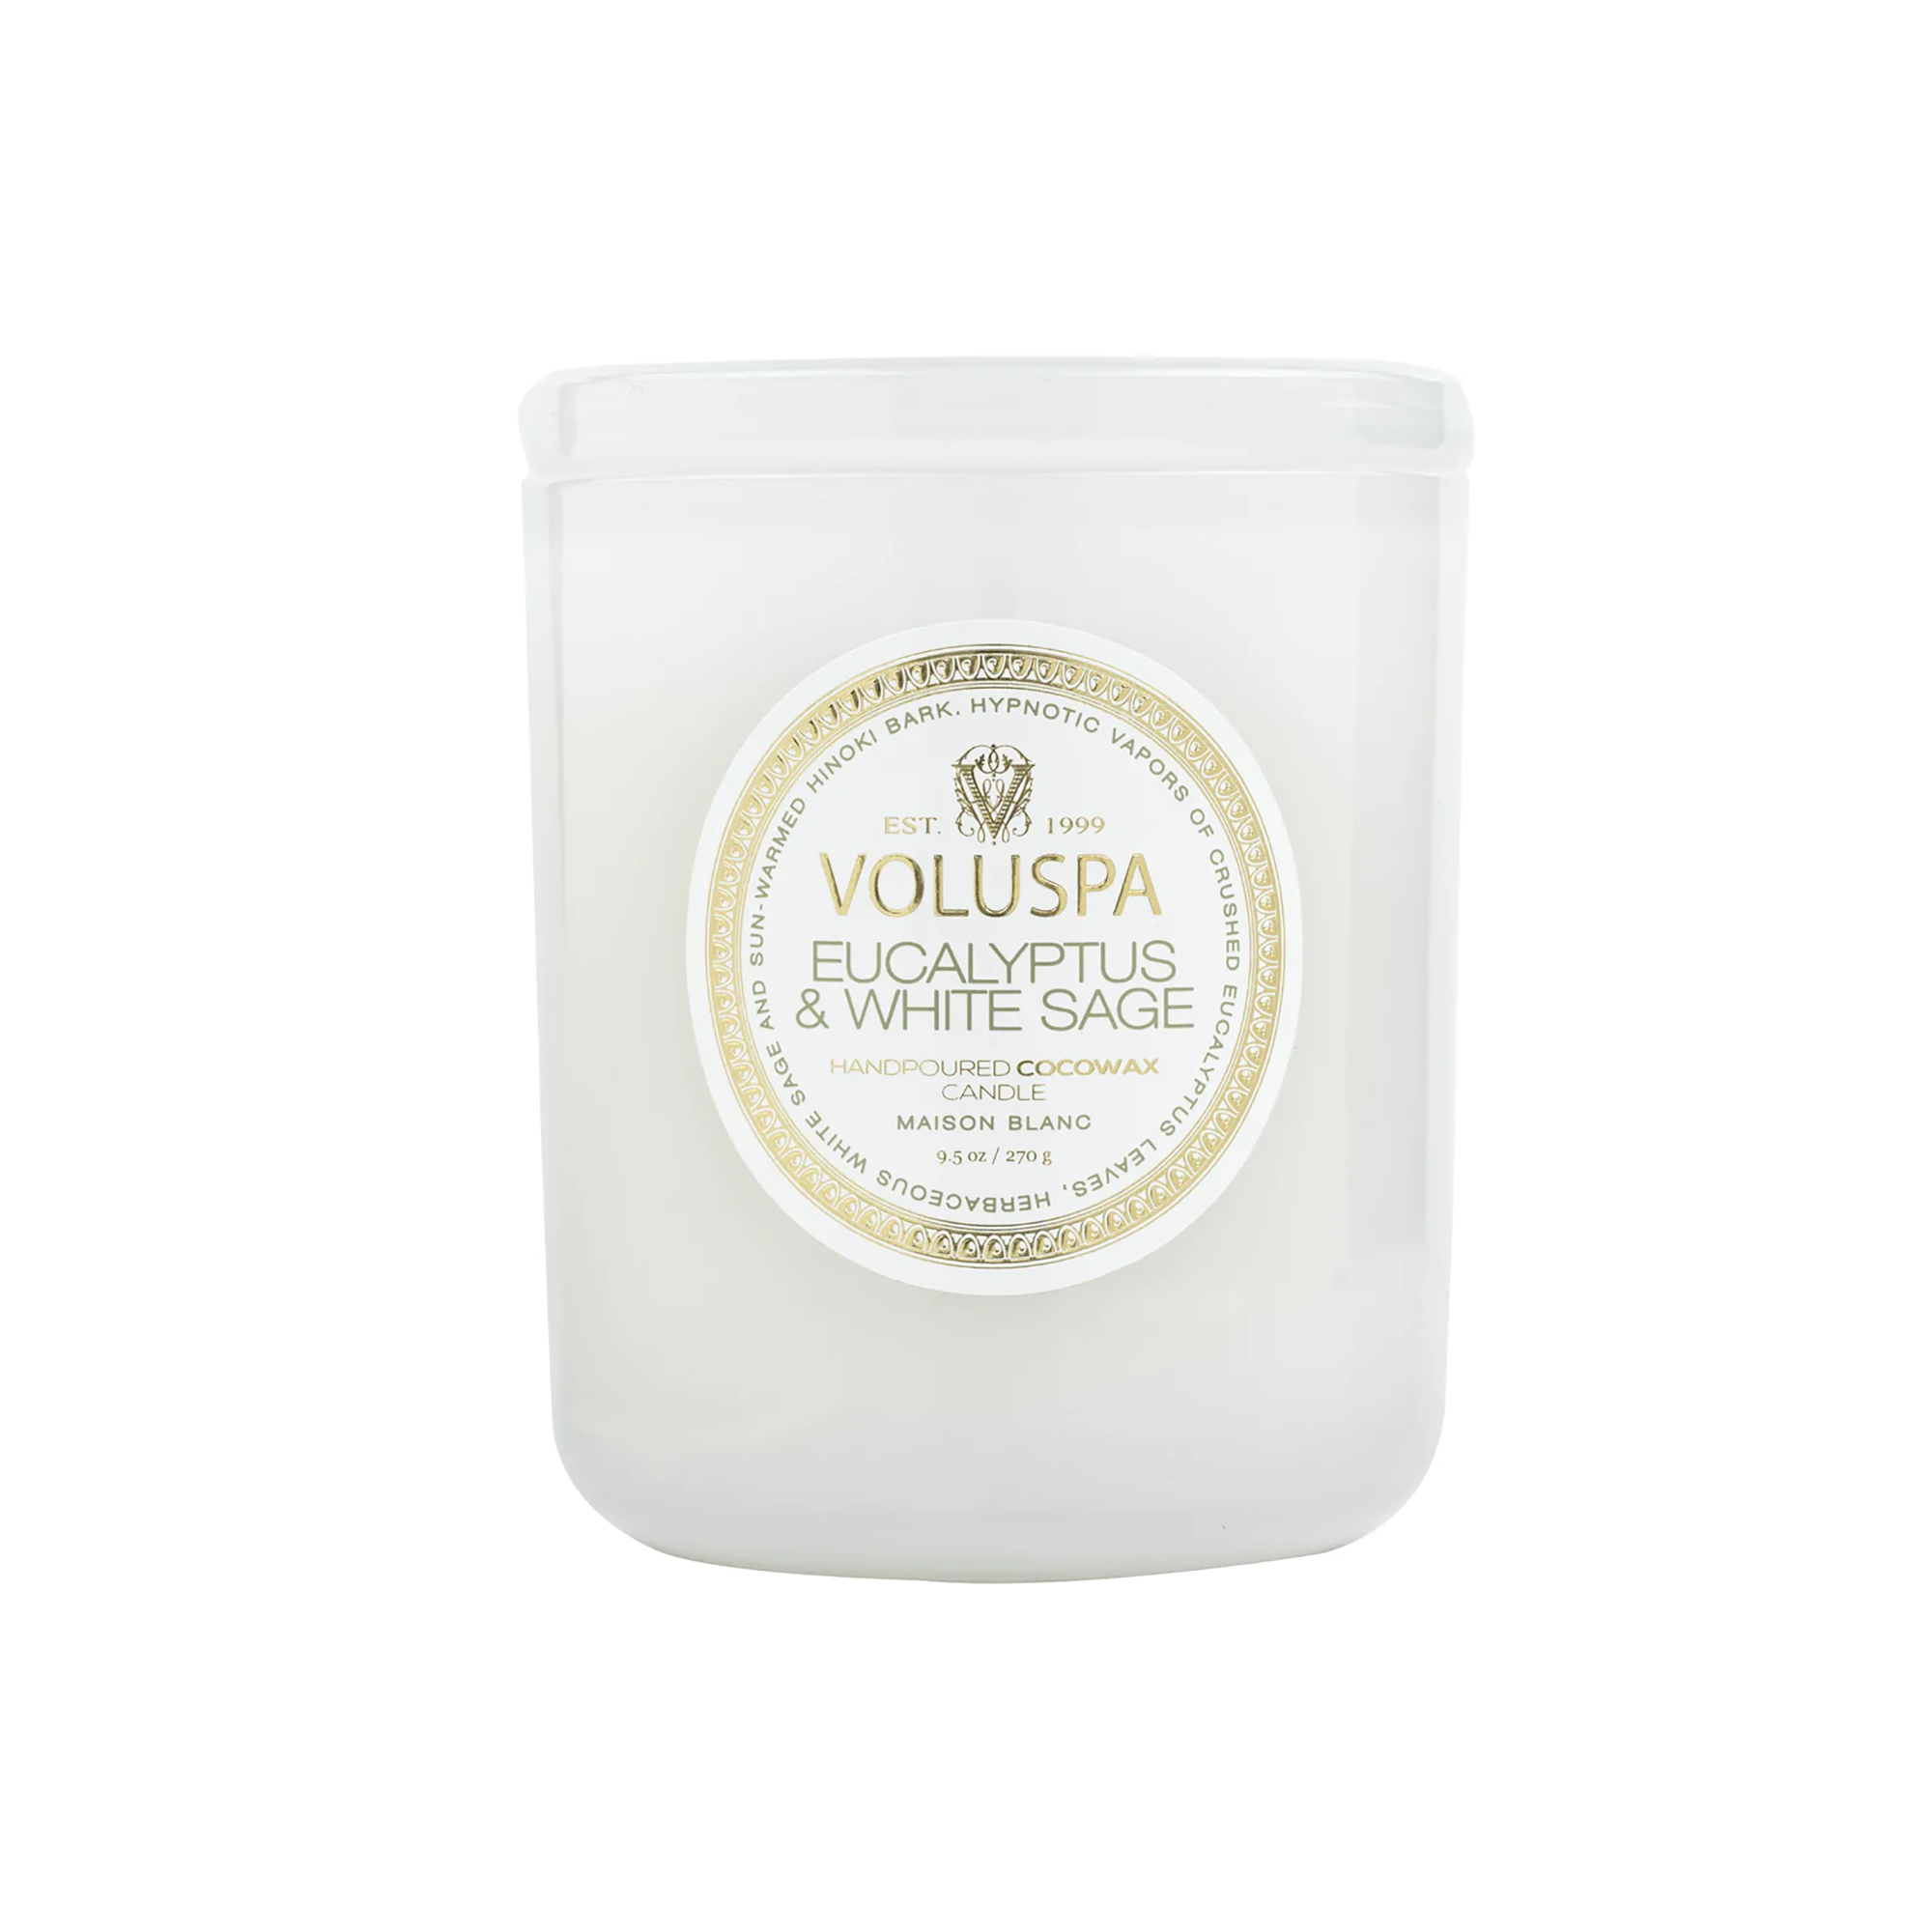 Voluspa Maison Blanc Classic Maison Candle / EUCALYPTUS & WHITE SAGE